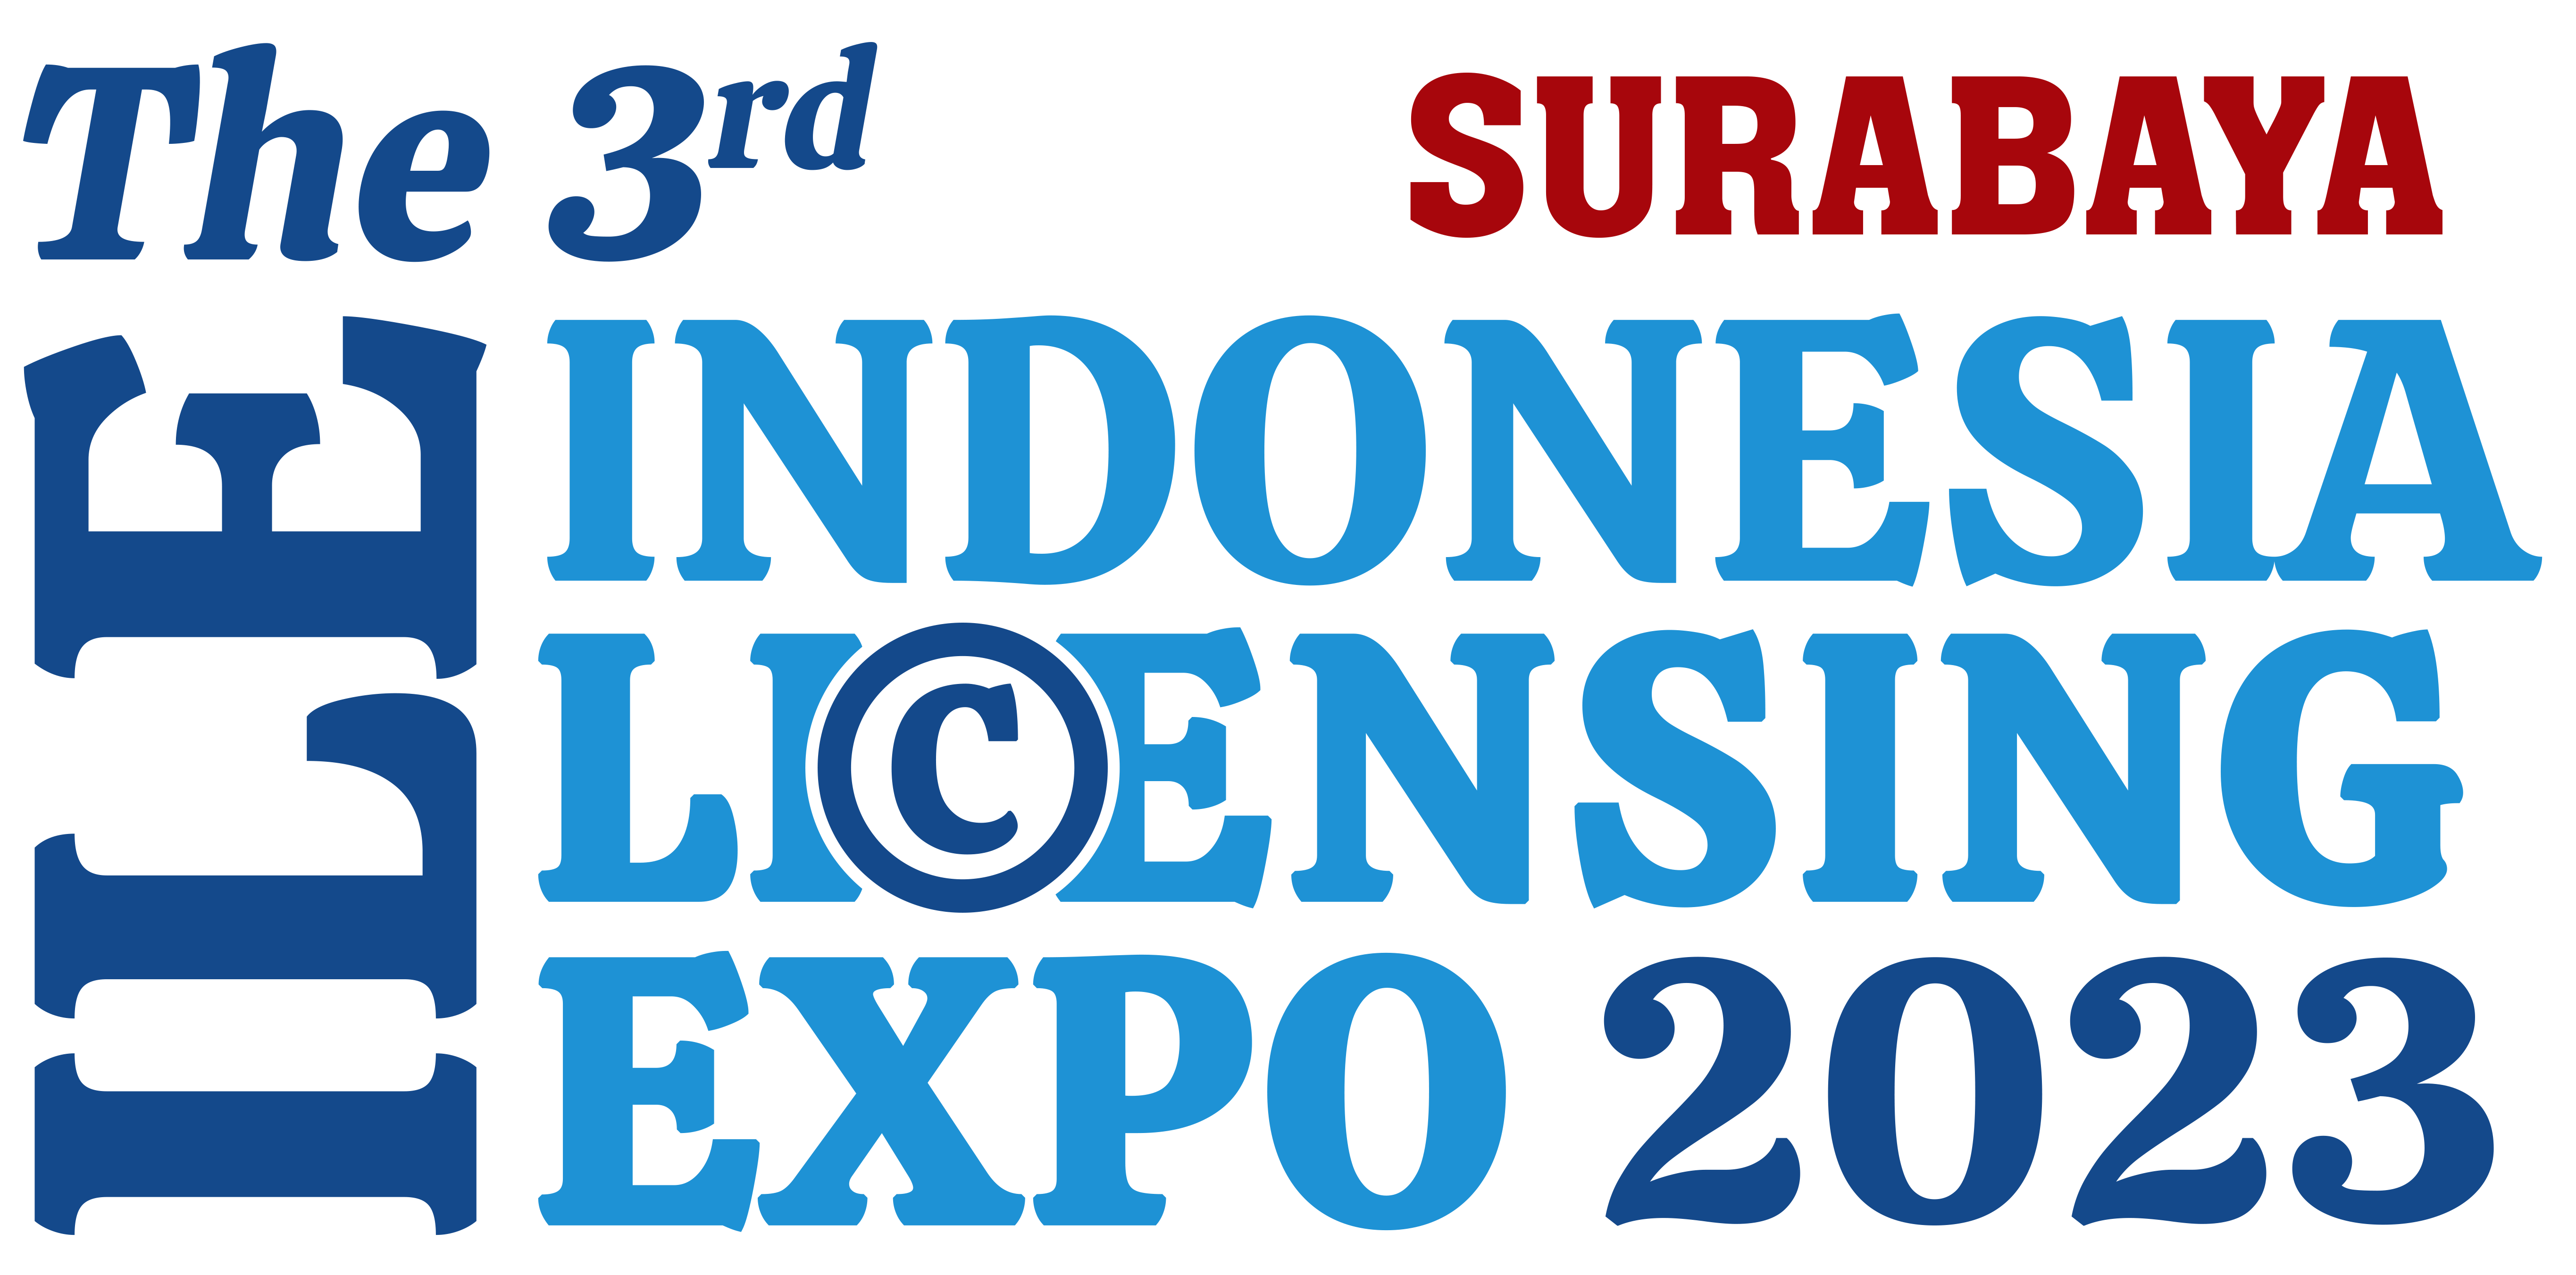 SURABAYA - INDONESIA LICENSING EXPO 2023